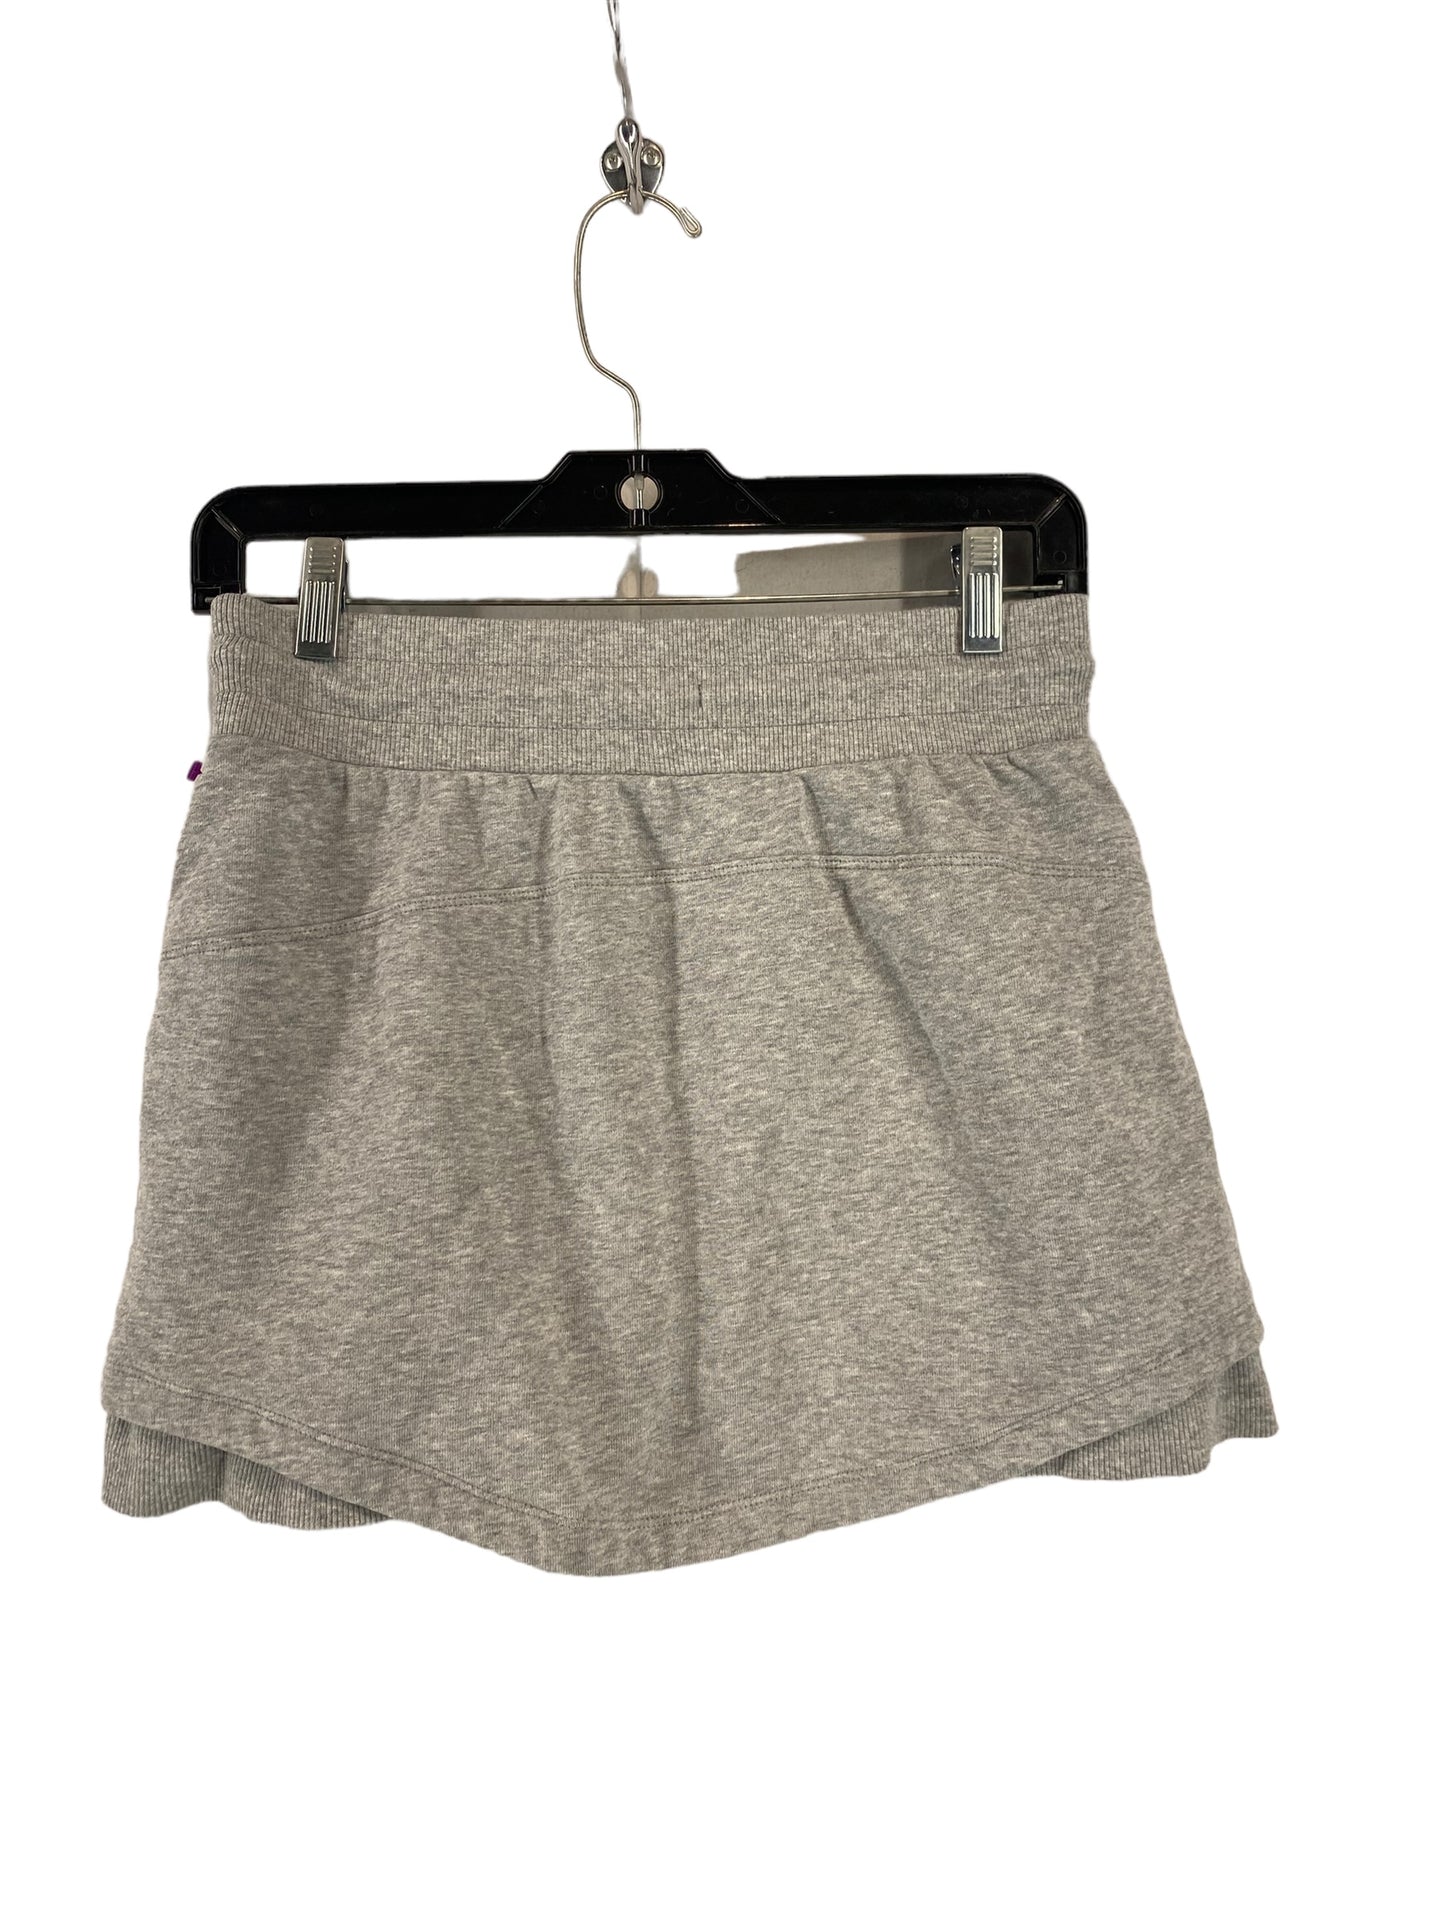 Athletic Skirt By Joy Lab  Size: Xs